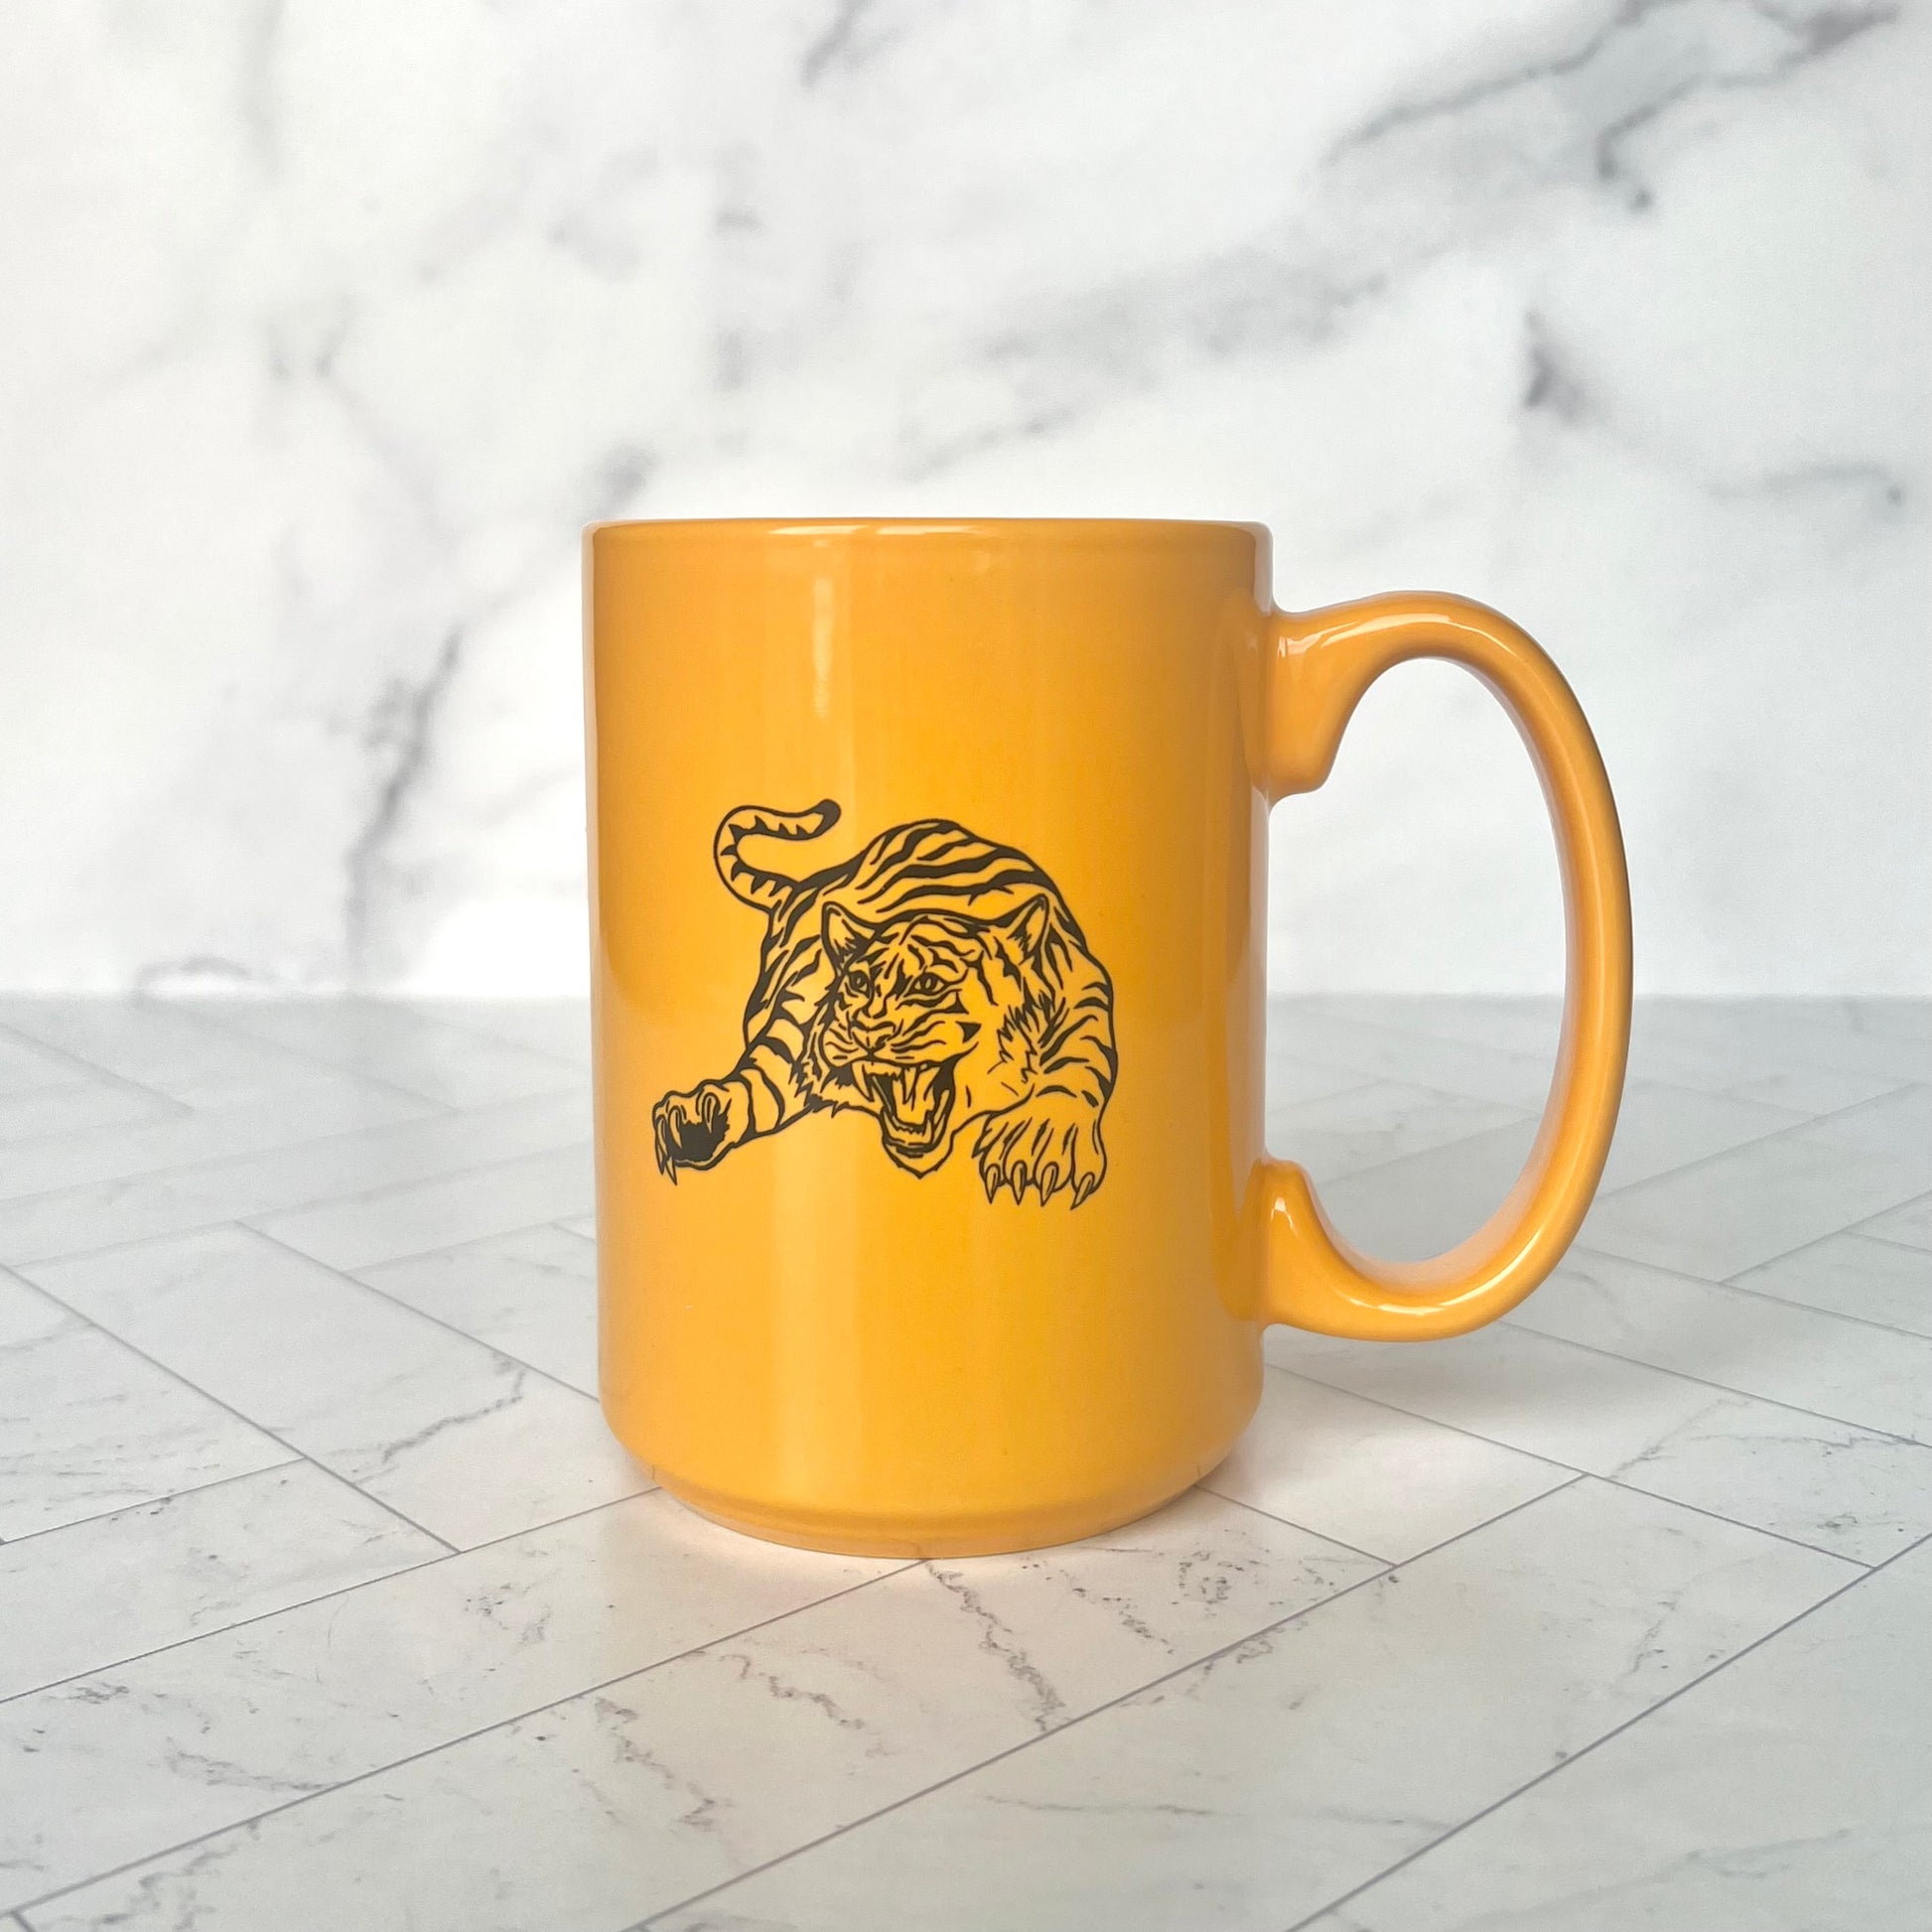 A yellow tiger mug with a handle